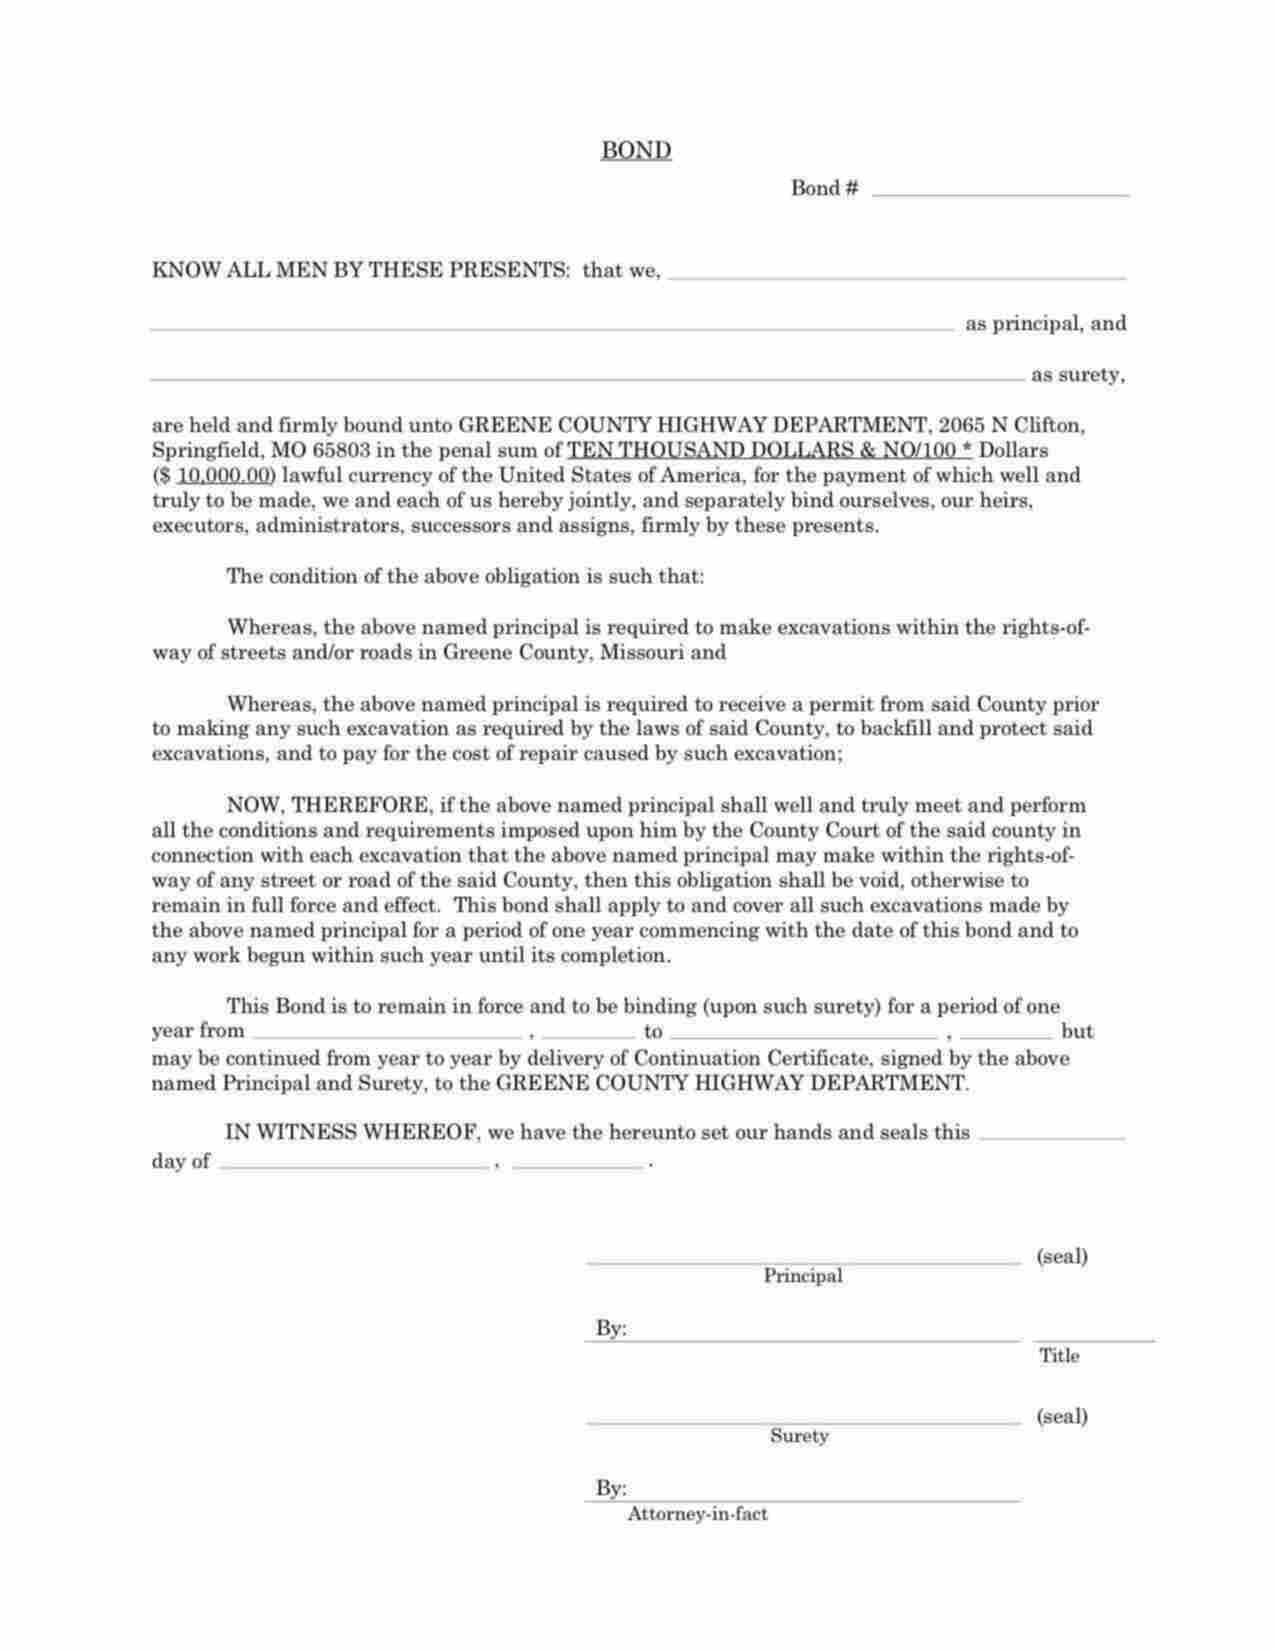 Missouri Right-of-Way Permit Bond Form